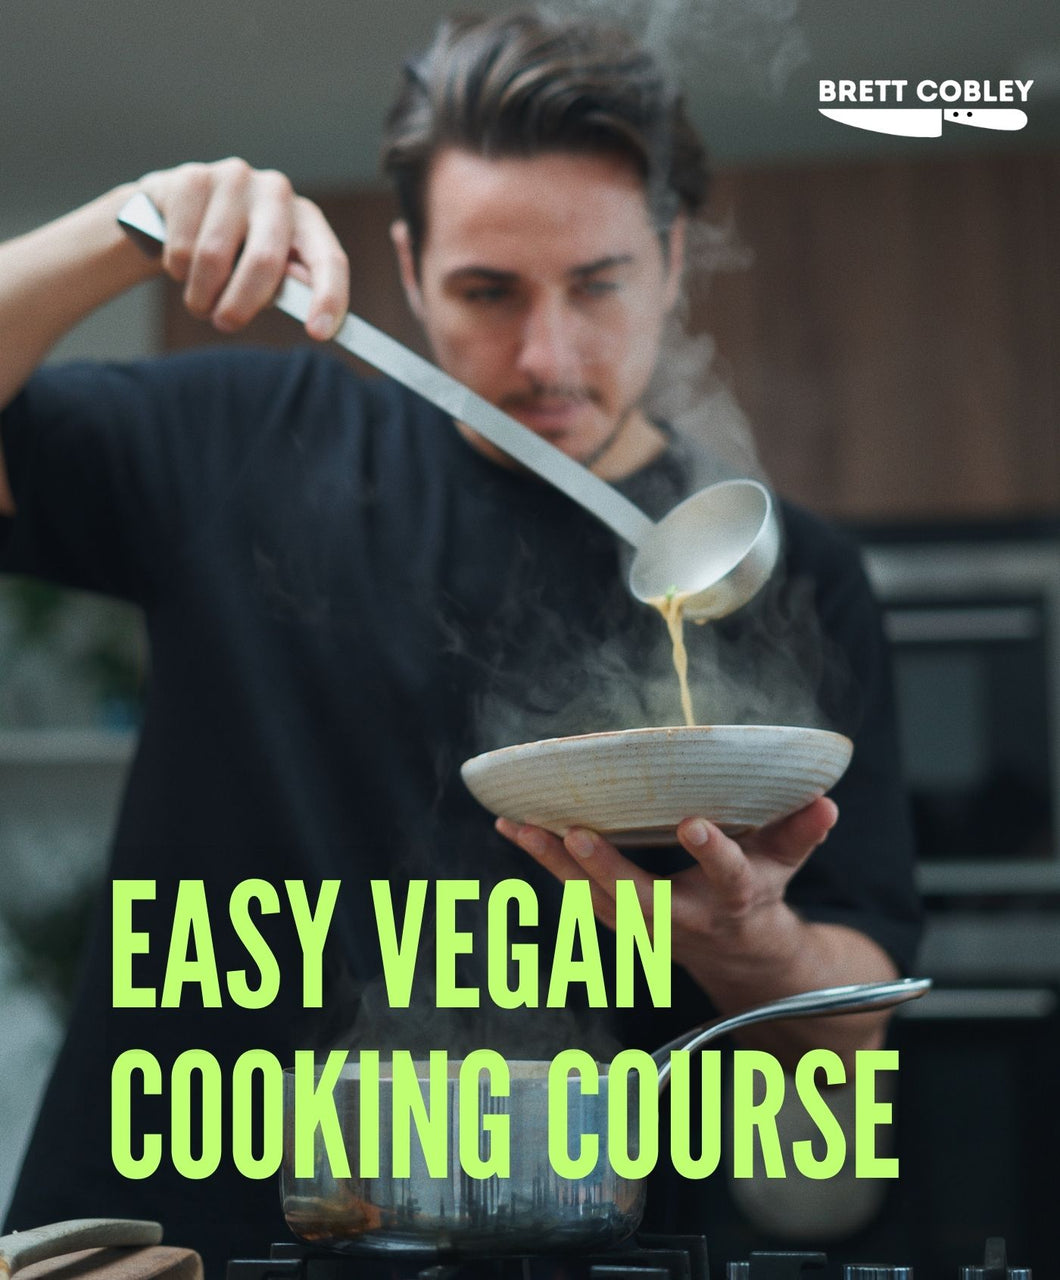 Brett Cobley's Easy Vegan Cooking Course